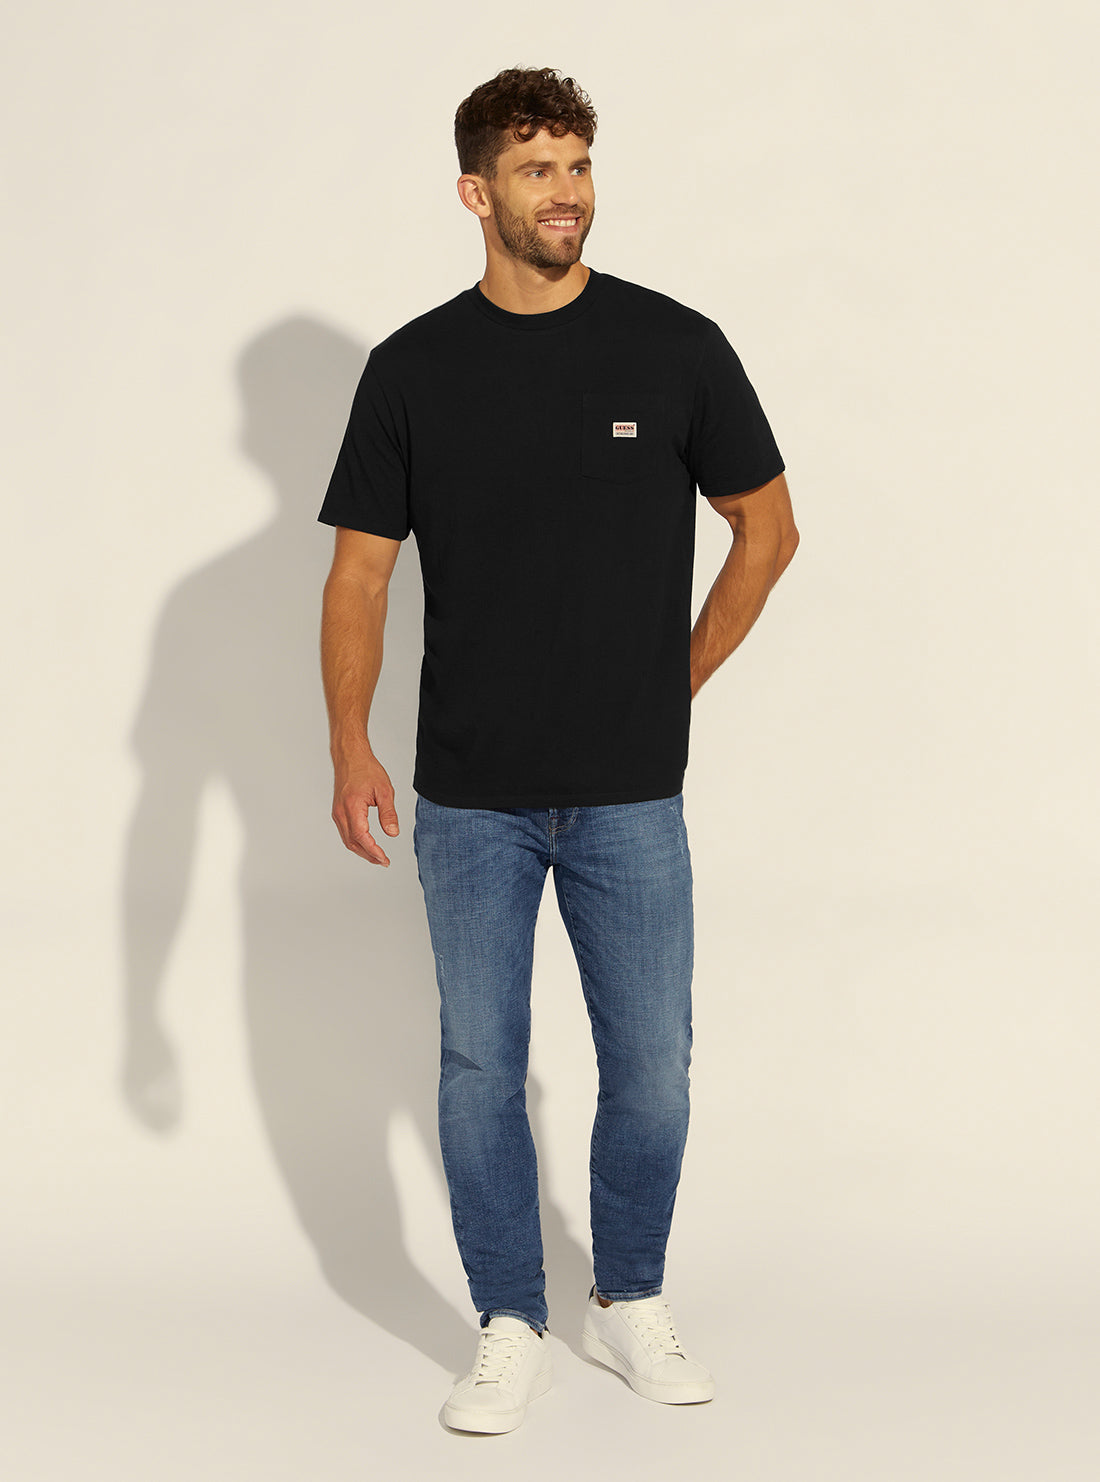 GUESS Mens Guess Originals Black Pocket Label T-Shirt M1BI43K9XF1 Model Full View